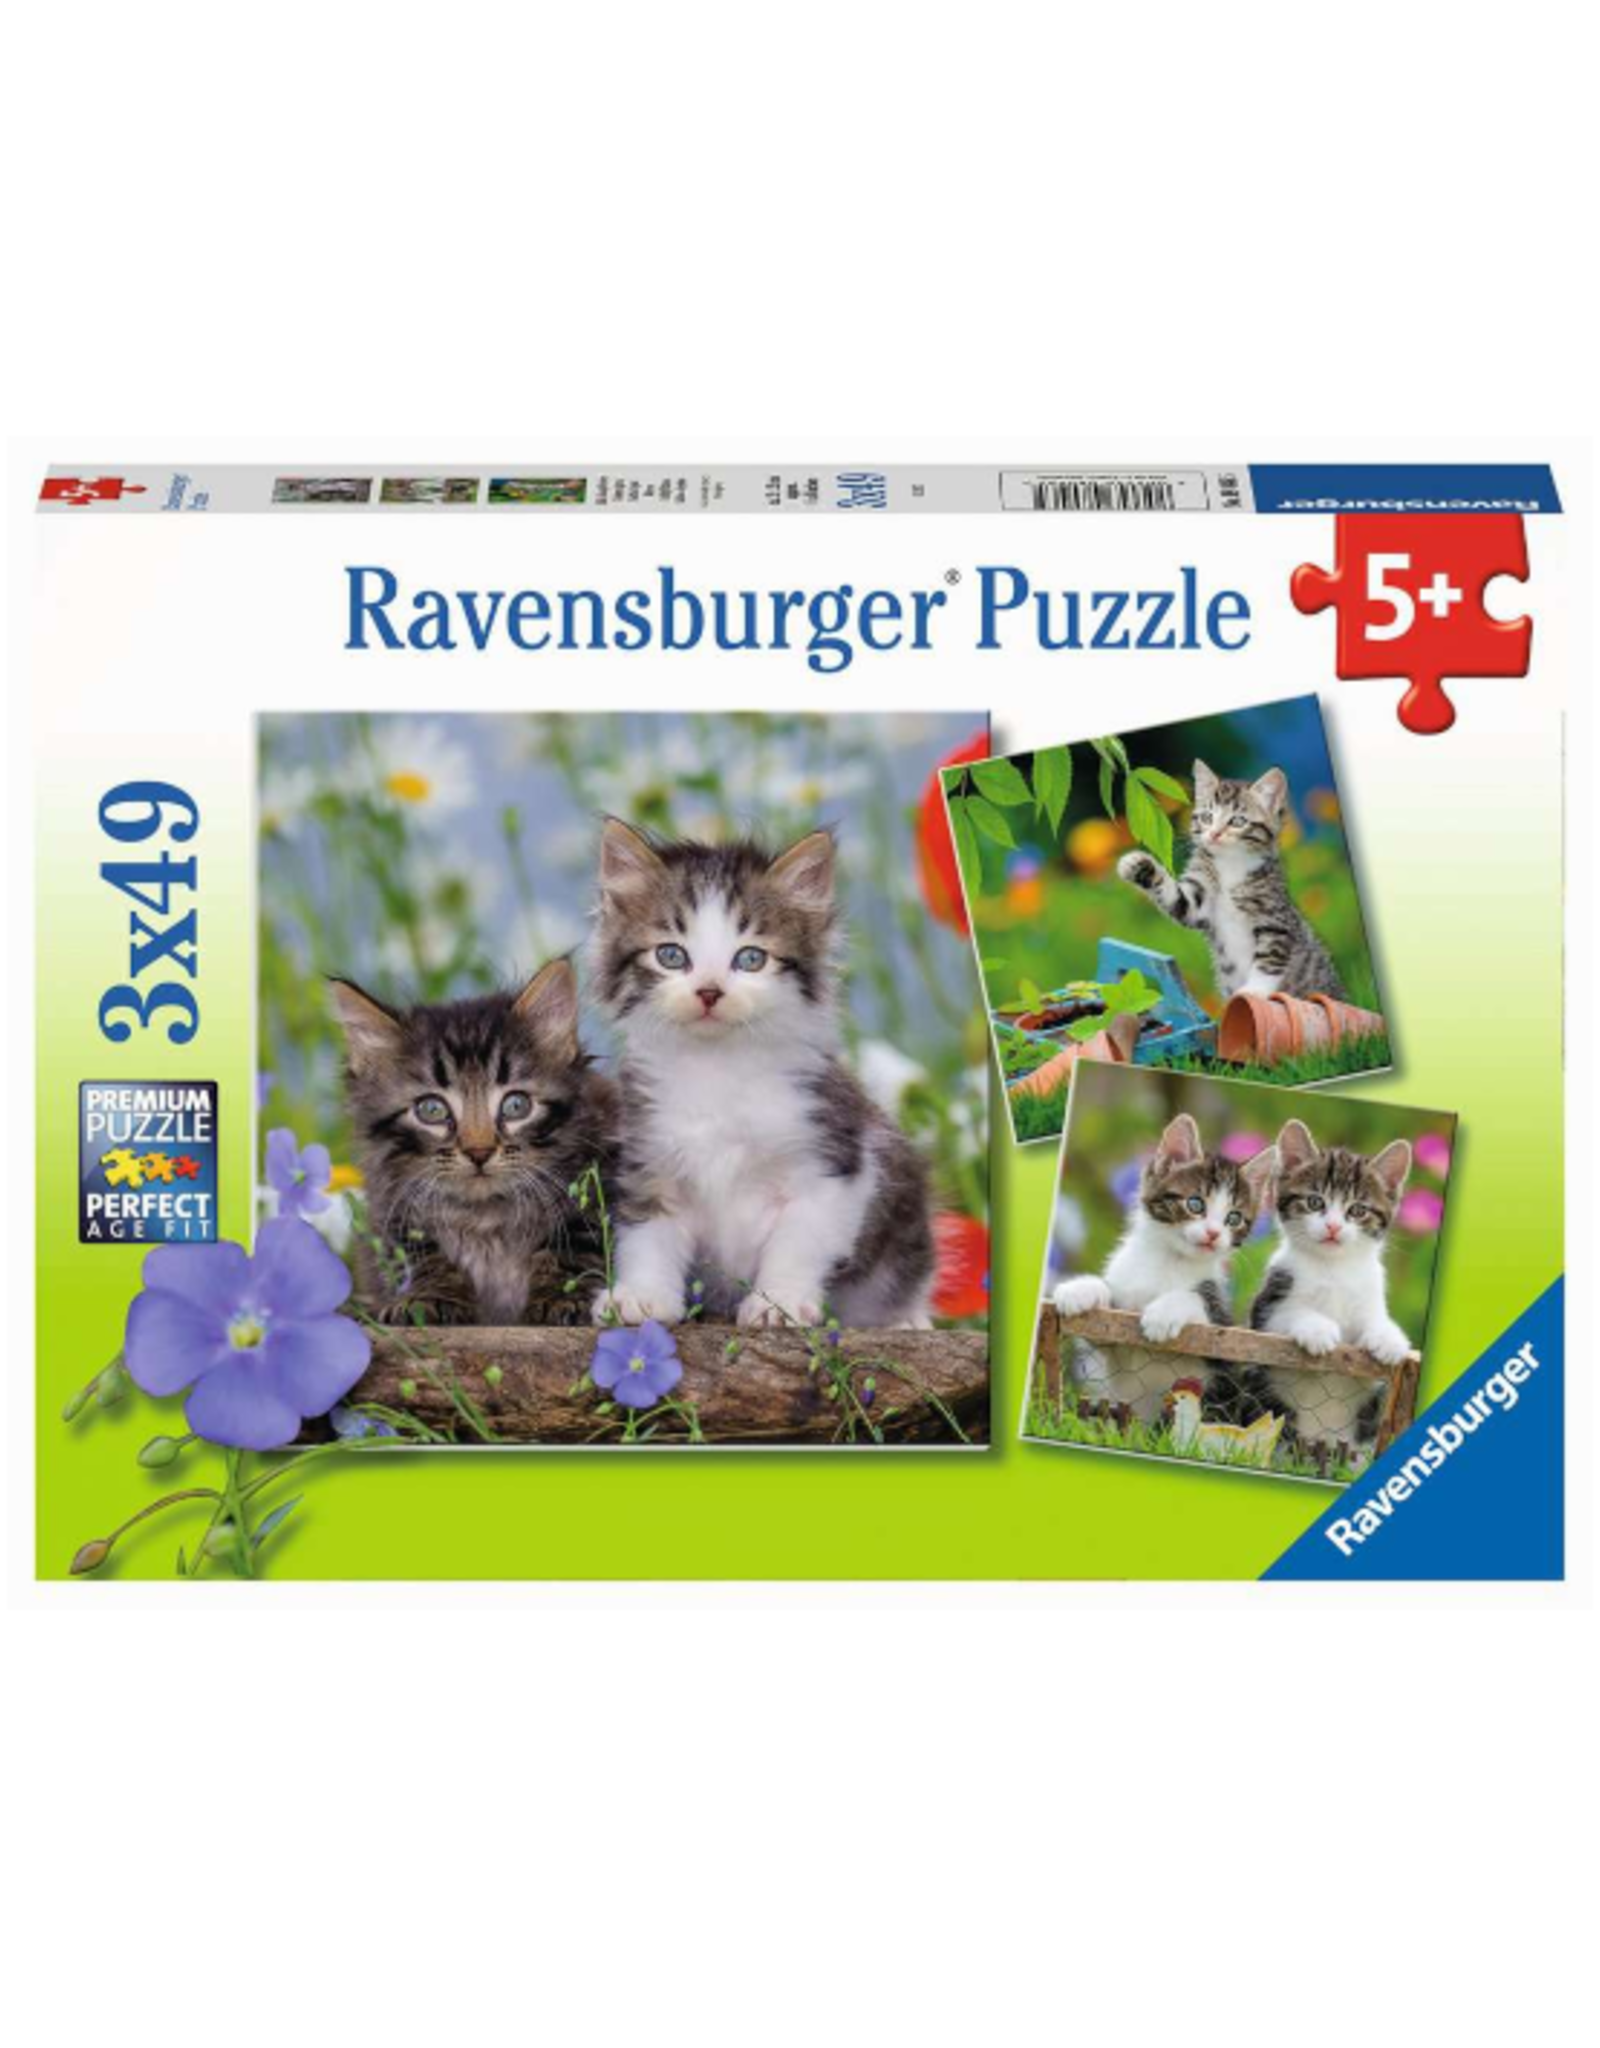 Ravensburger Ravensburger - 5+ - 3 x 49 - Cuddly Kittens